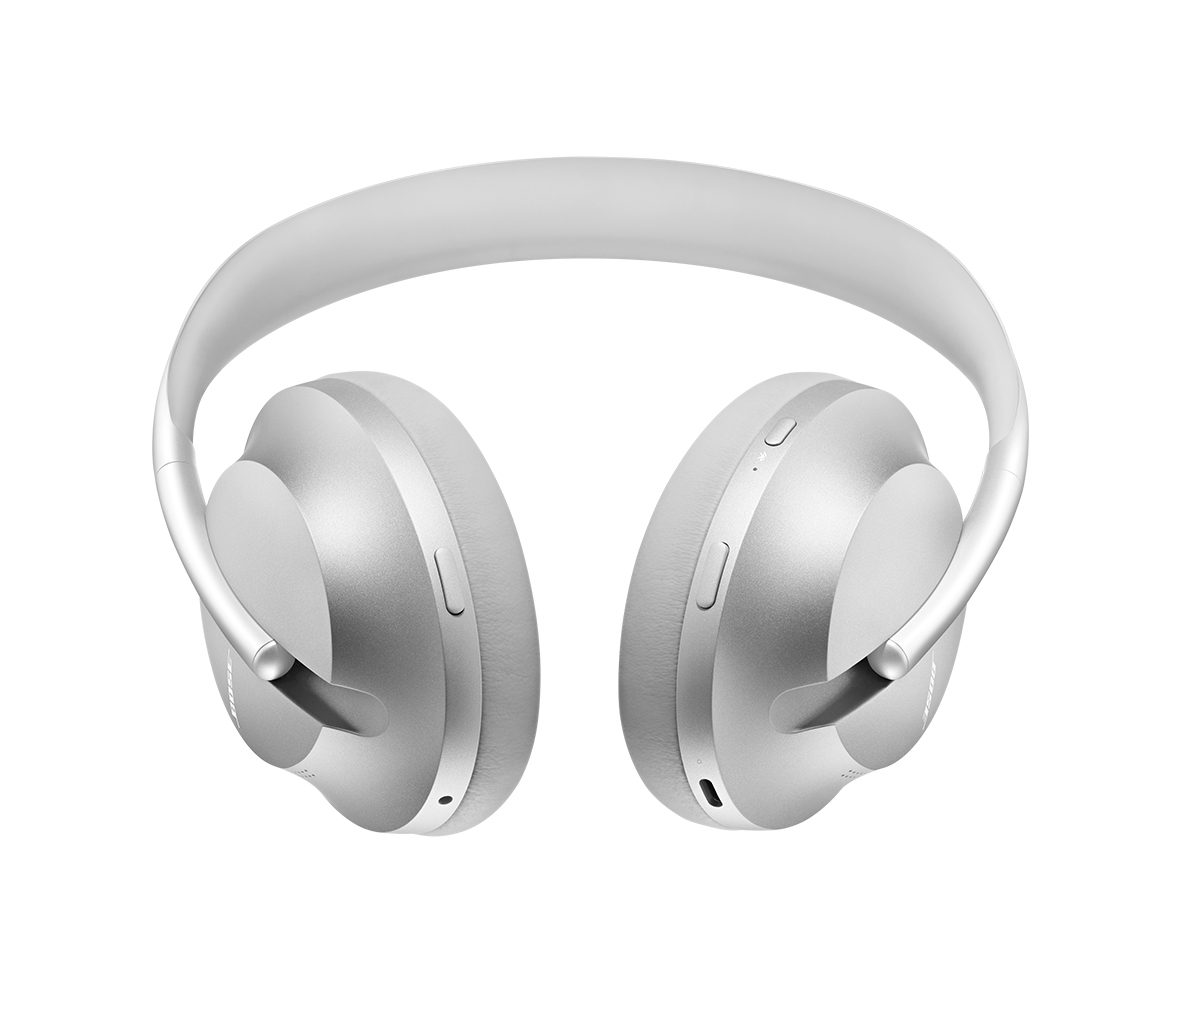 Bose Noise Cancelling Headphones Produkt Support Von Bose